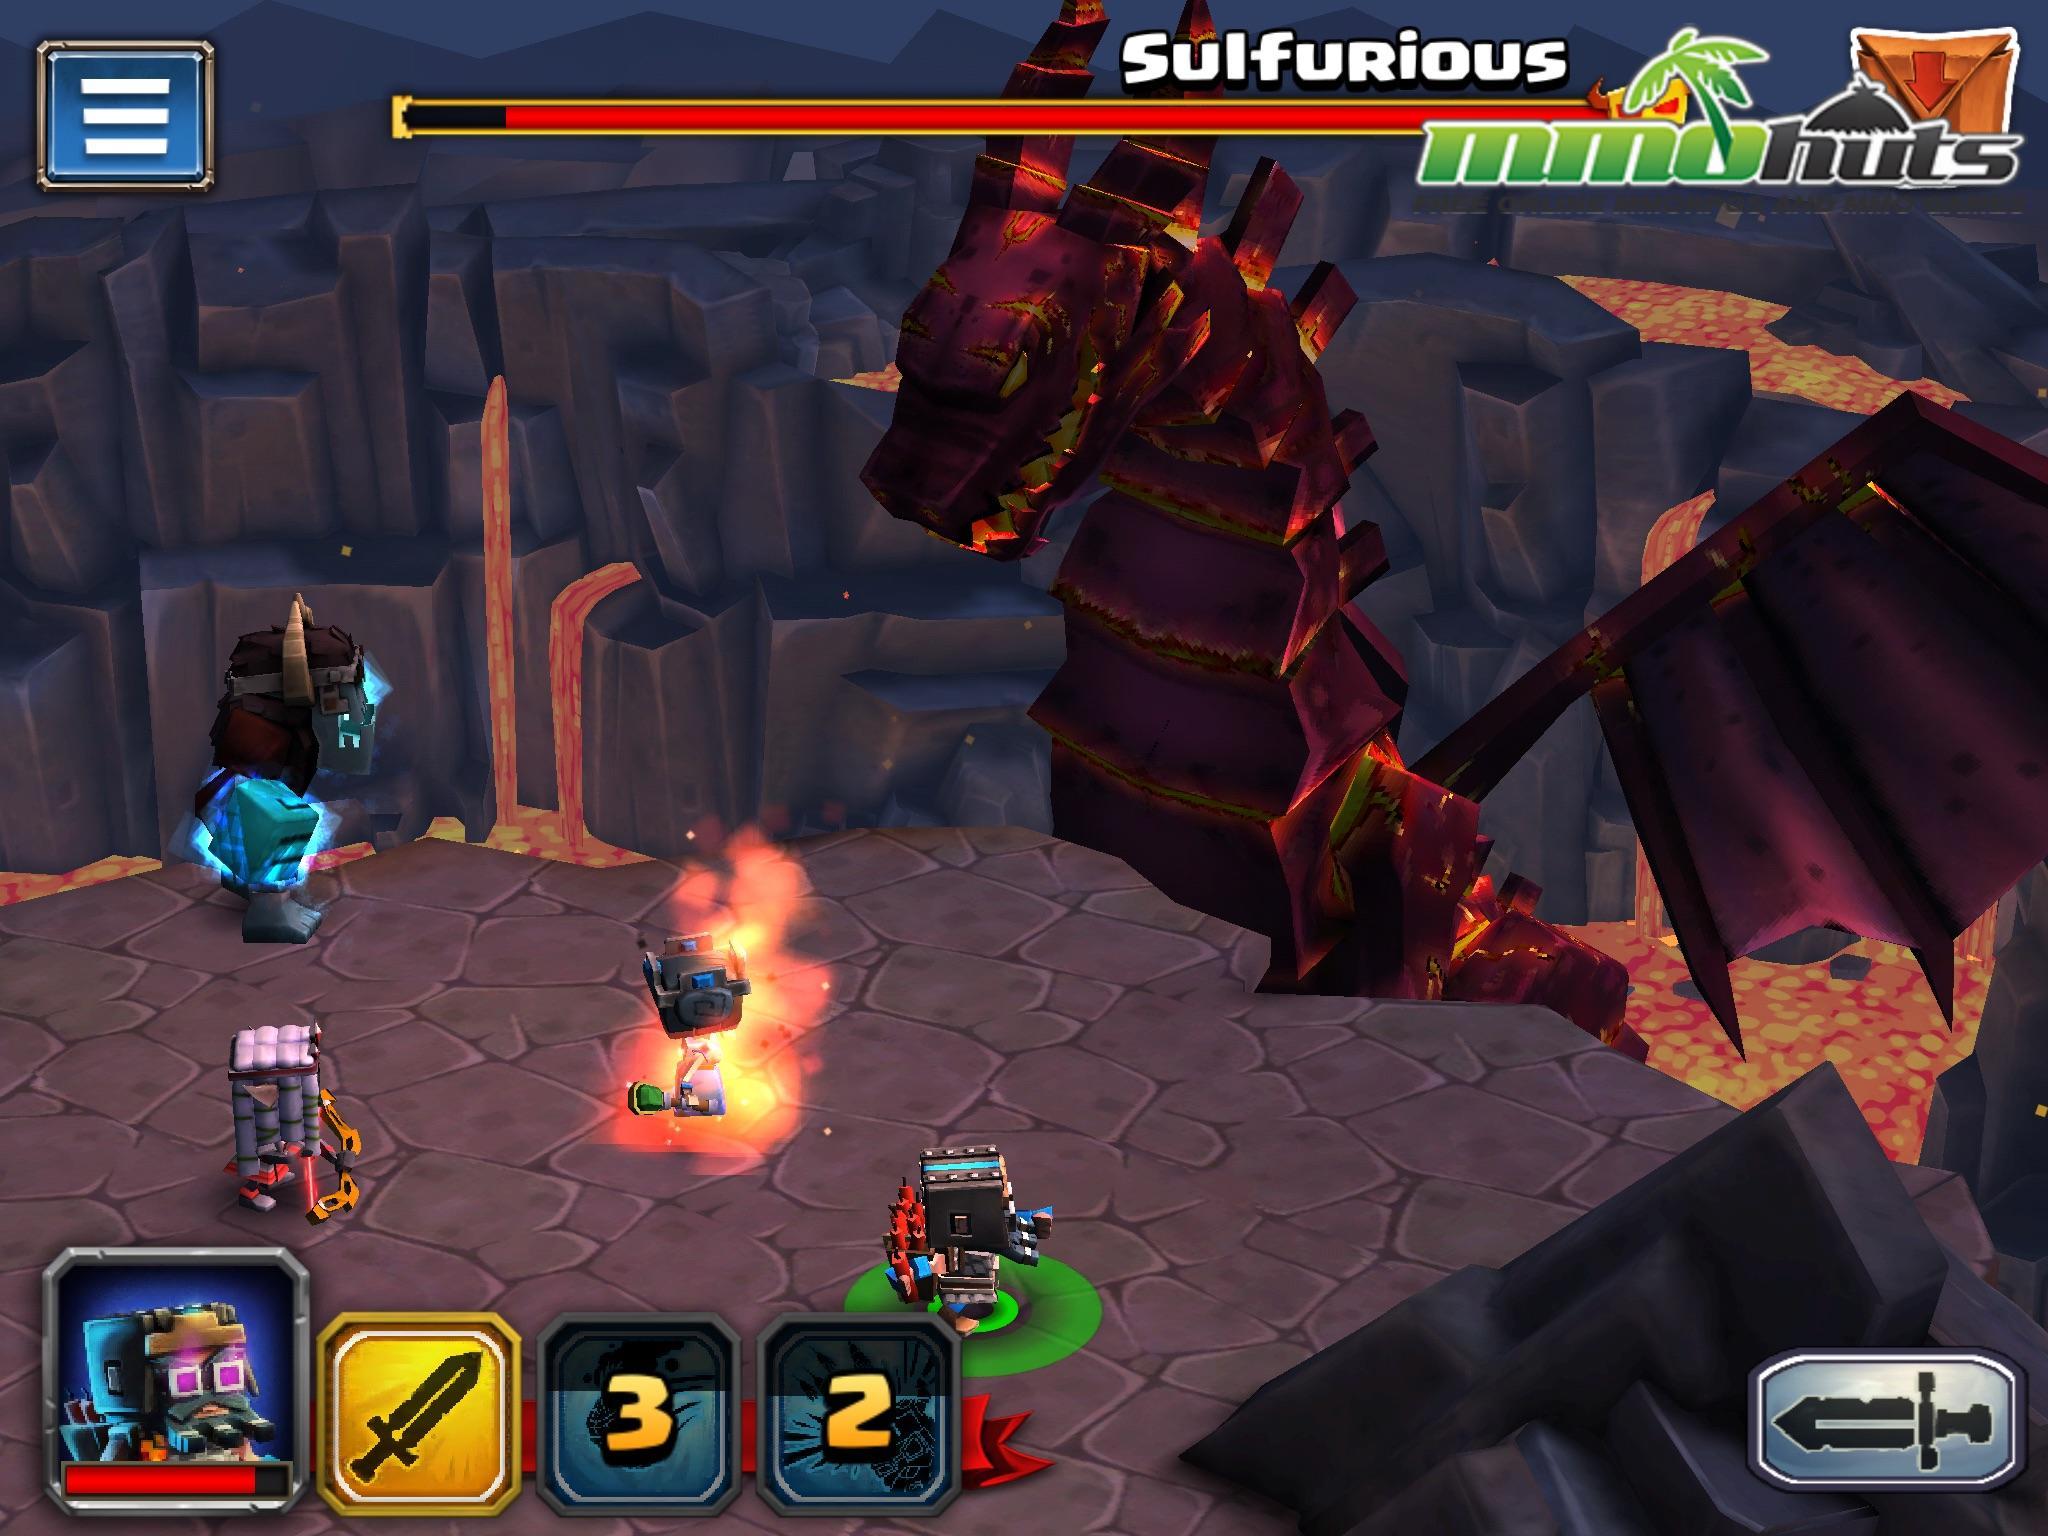 Dungeon Boss Mobile_Sulfurious Dragon